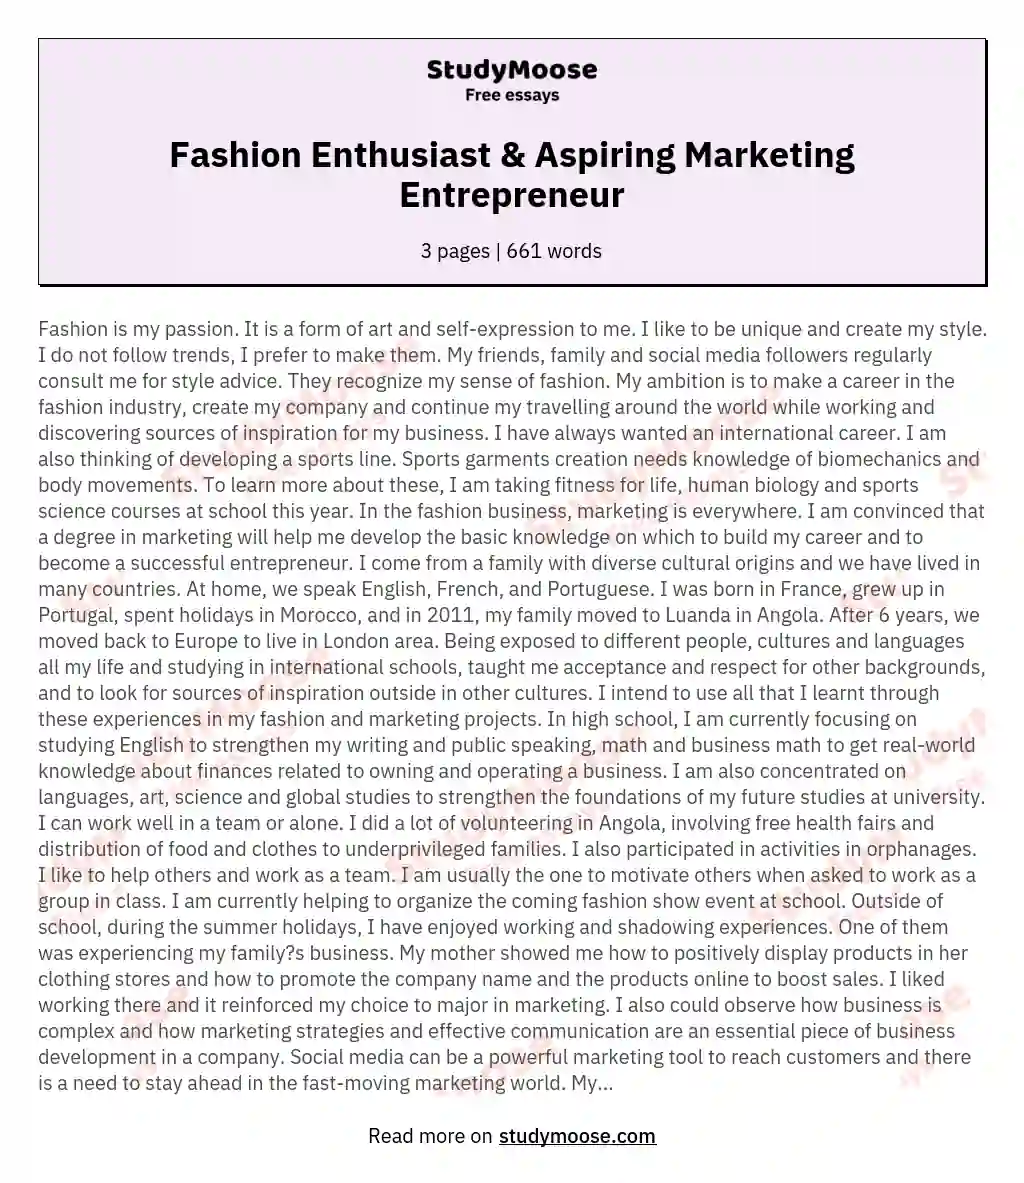 Fashion Enthusiast & Aspiring Marketing Entrepreneur essay